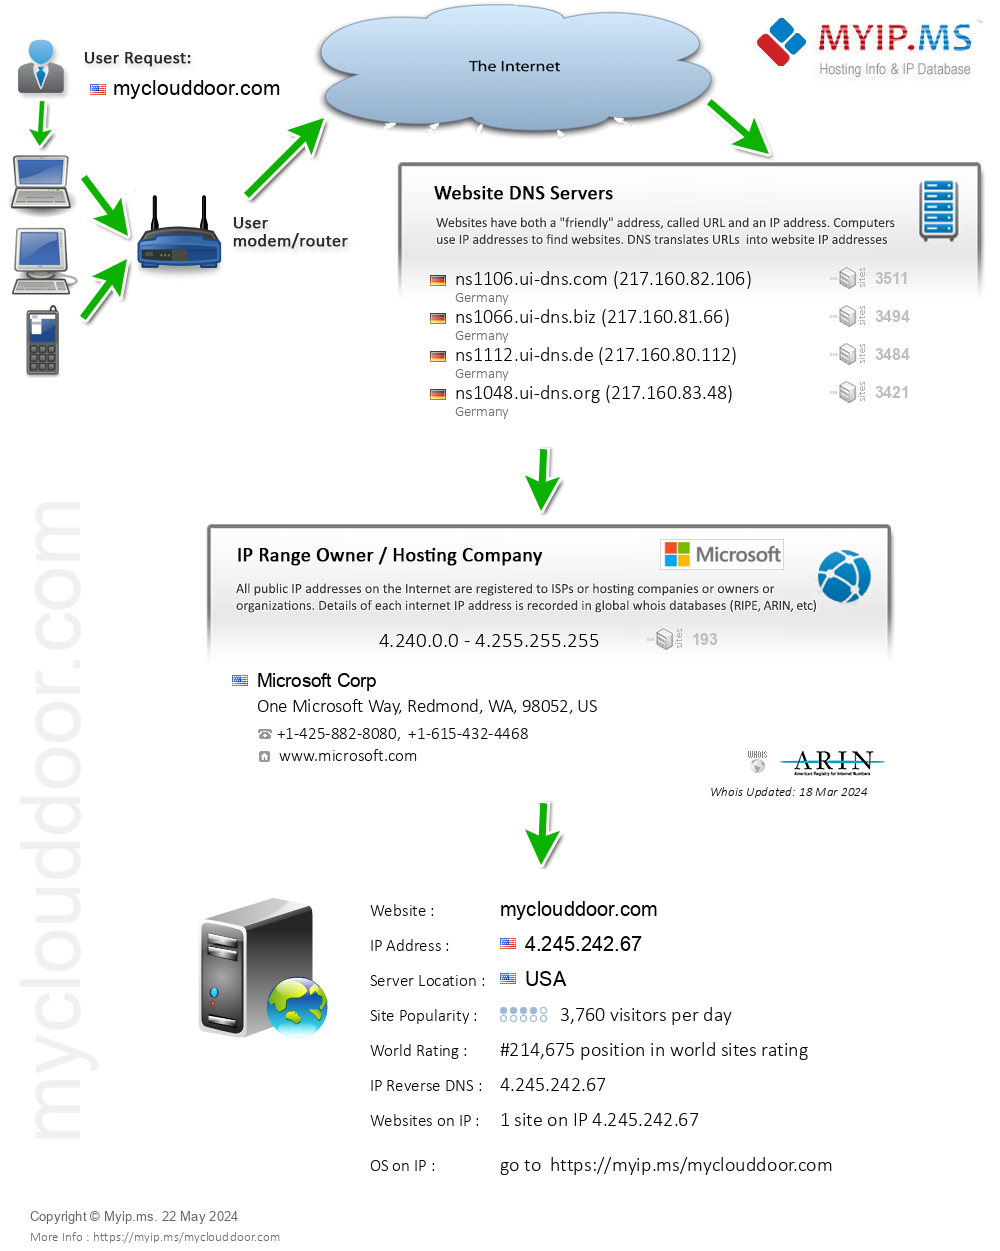 Myclouddoor.com - Website Hosting Visual IP Diagram